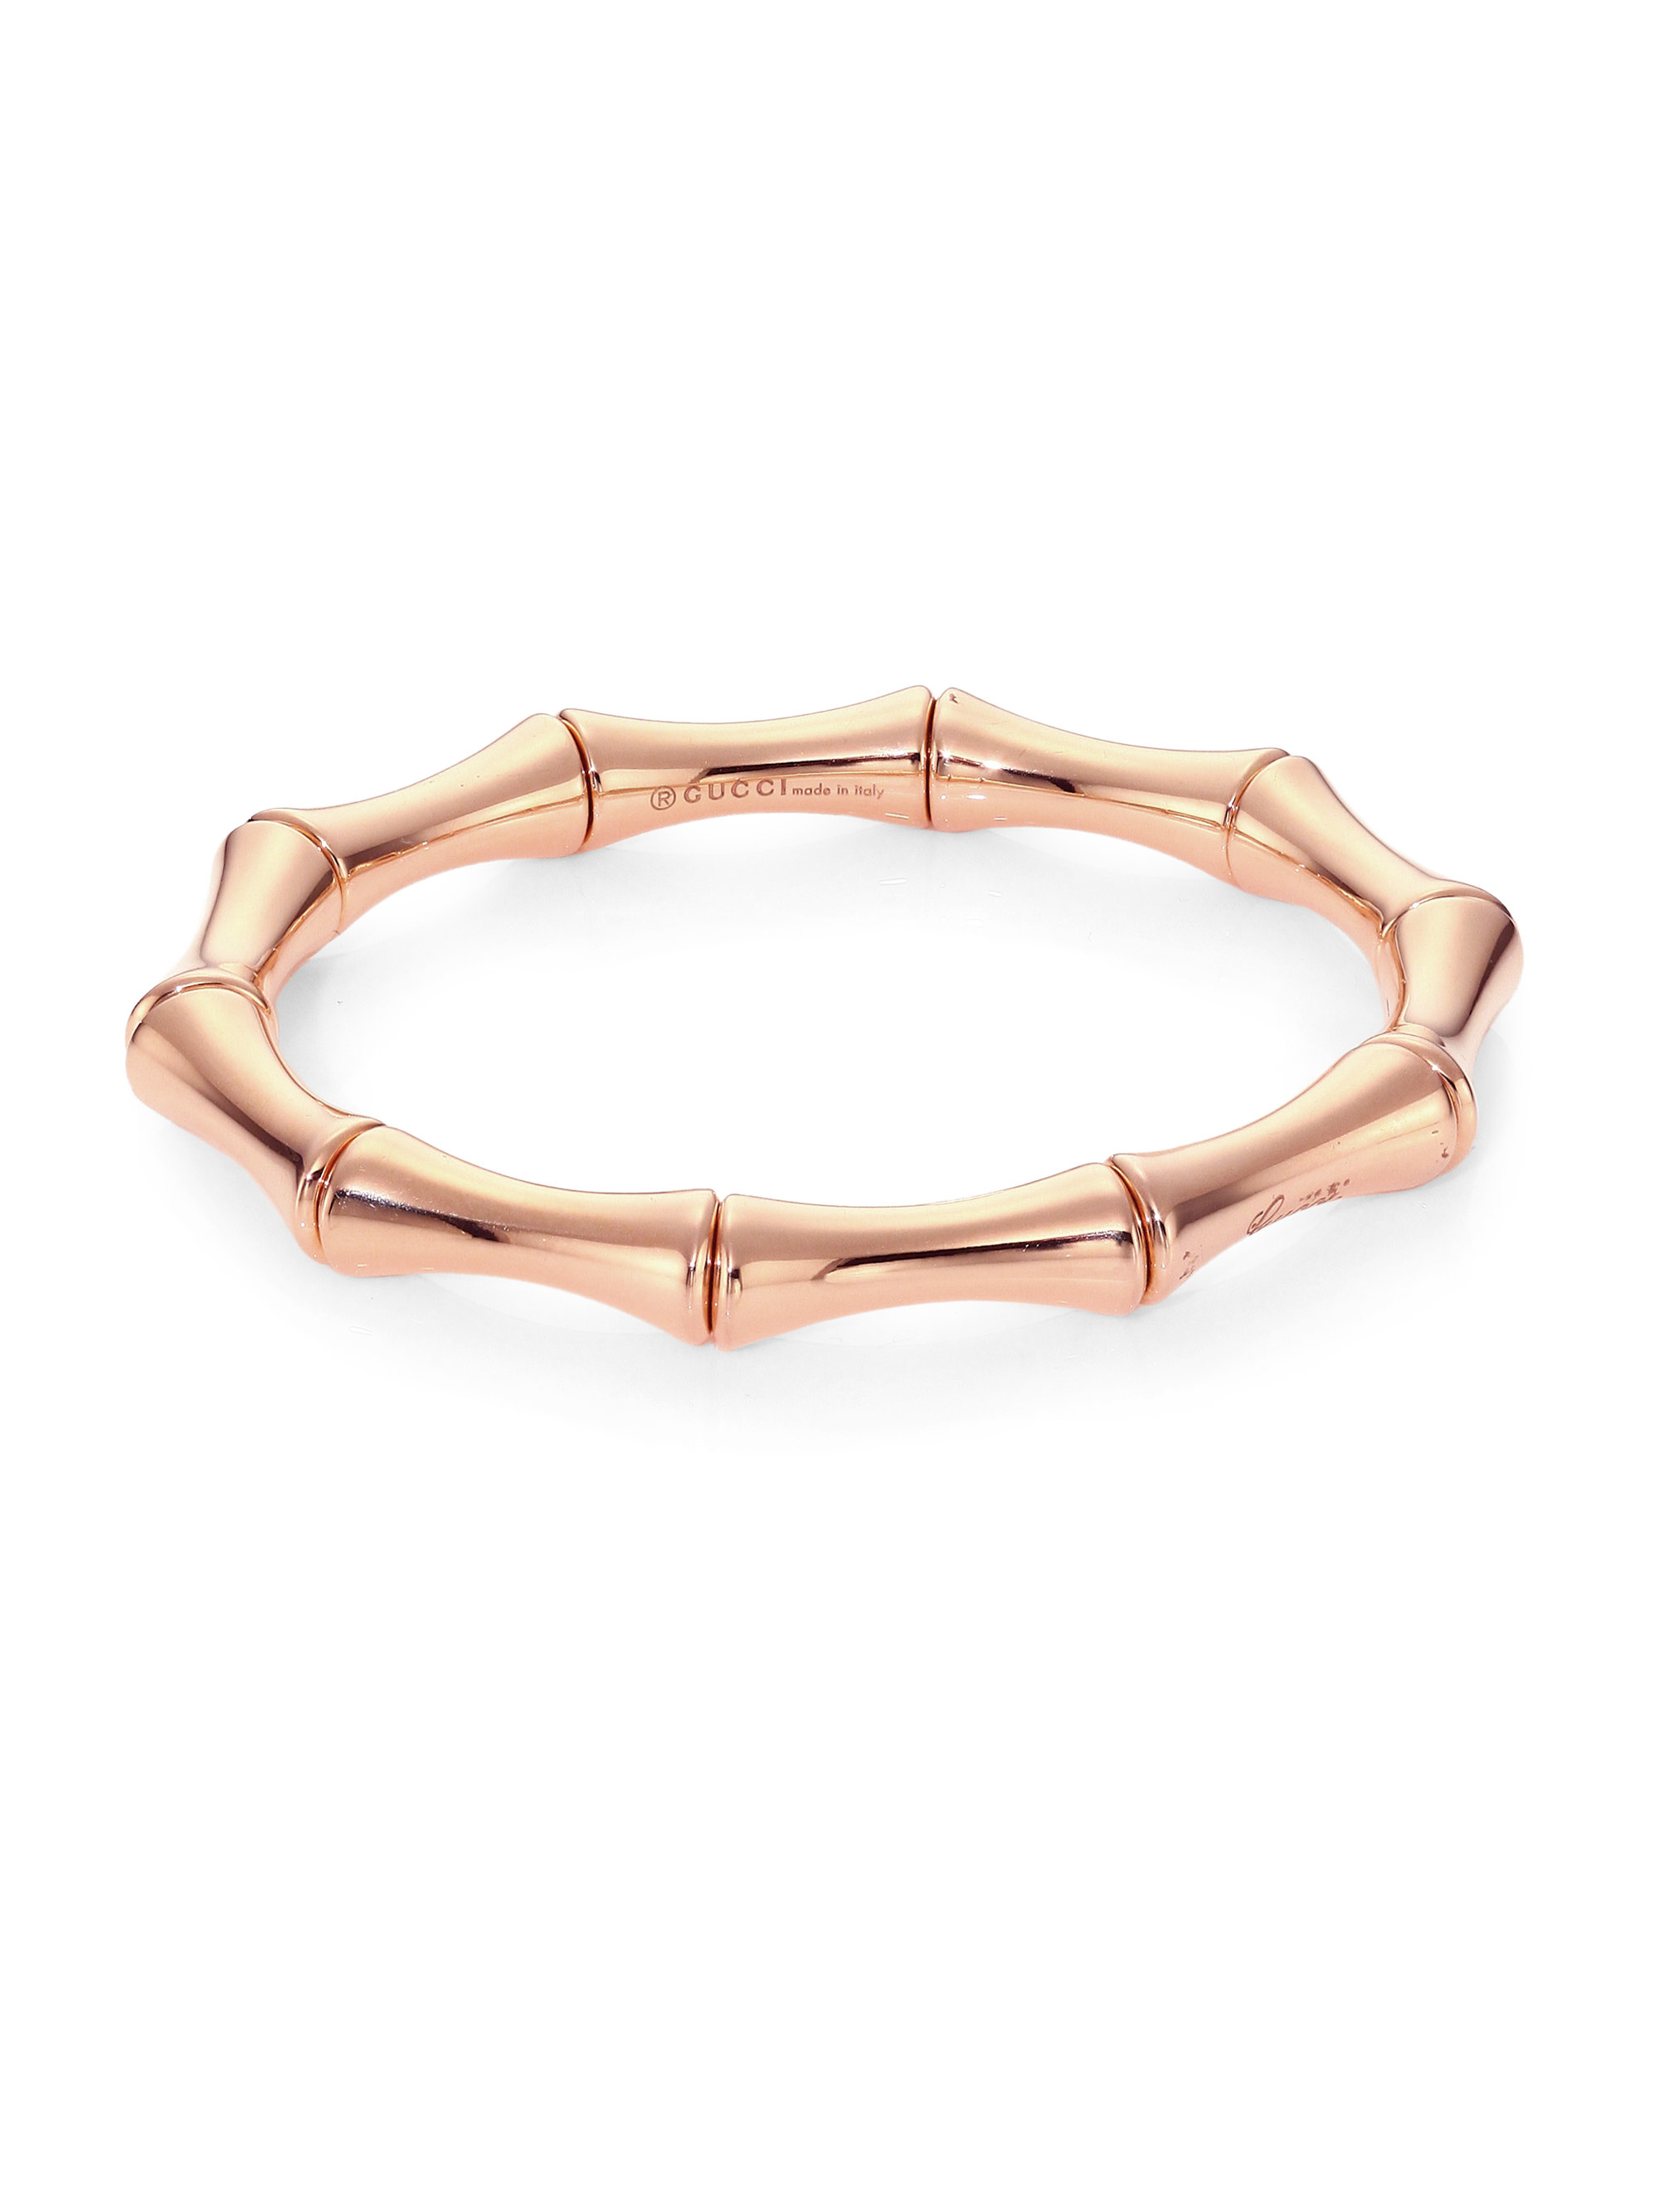 Top more than 72 rose gold gucci bracelet best - 3tdesign.edu.vn